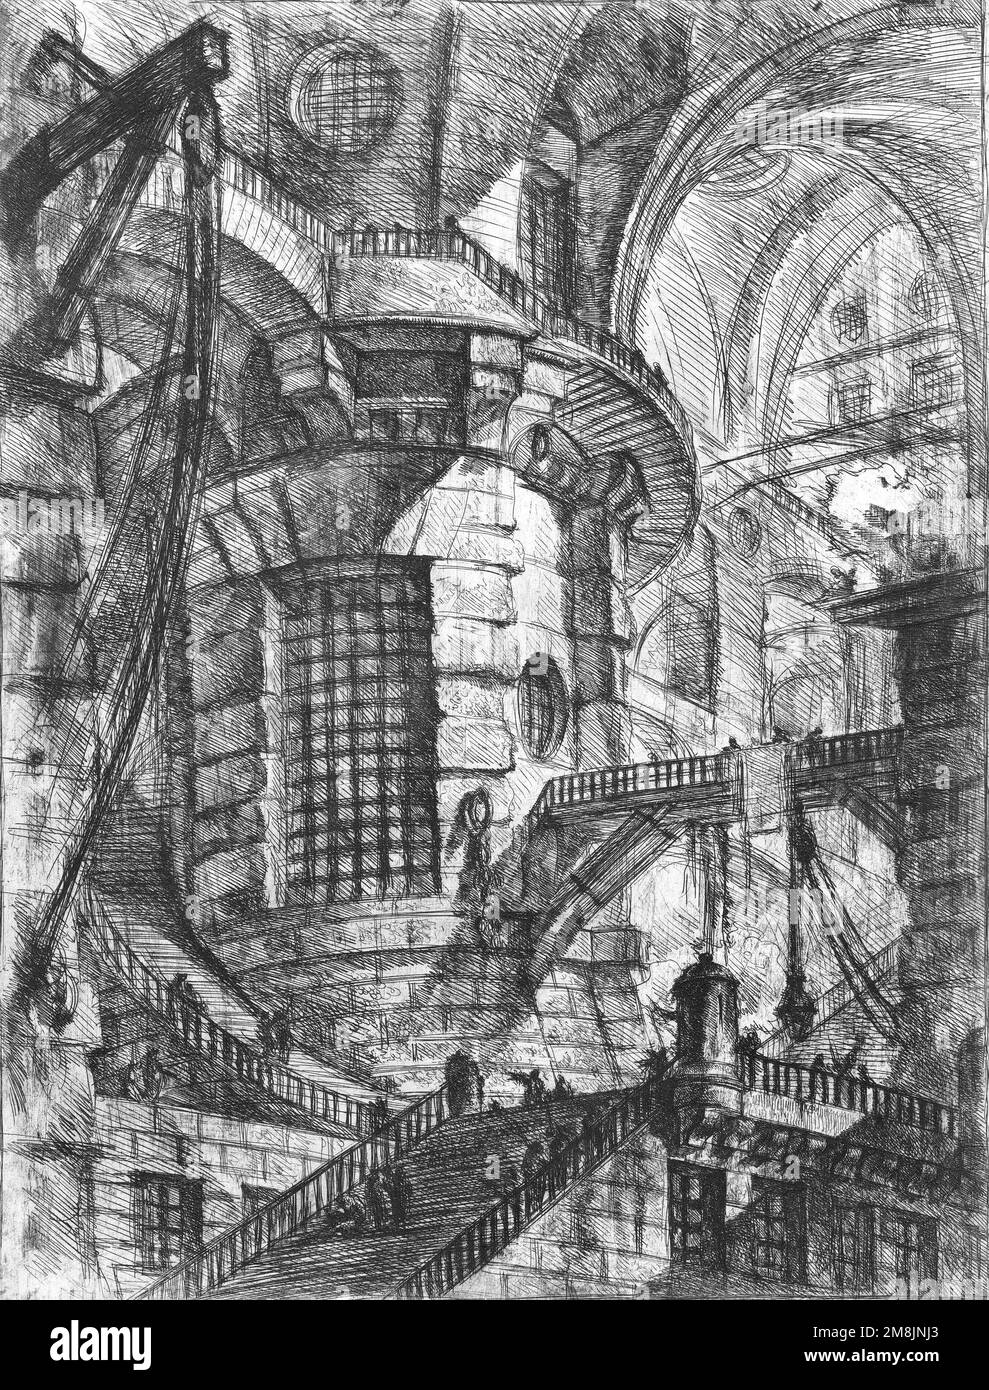 Piranesi (1720-1728). The Round Tower, from 'Carceri d'invenzione' (Imaginary Prisons) by Giovanni Battista Piranesi, etching/engraving, c. 1749/50 Stock Photo